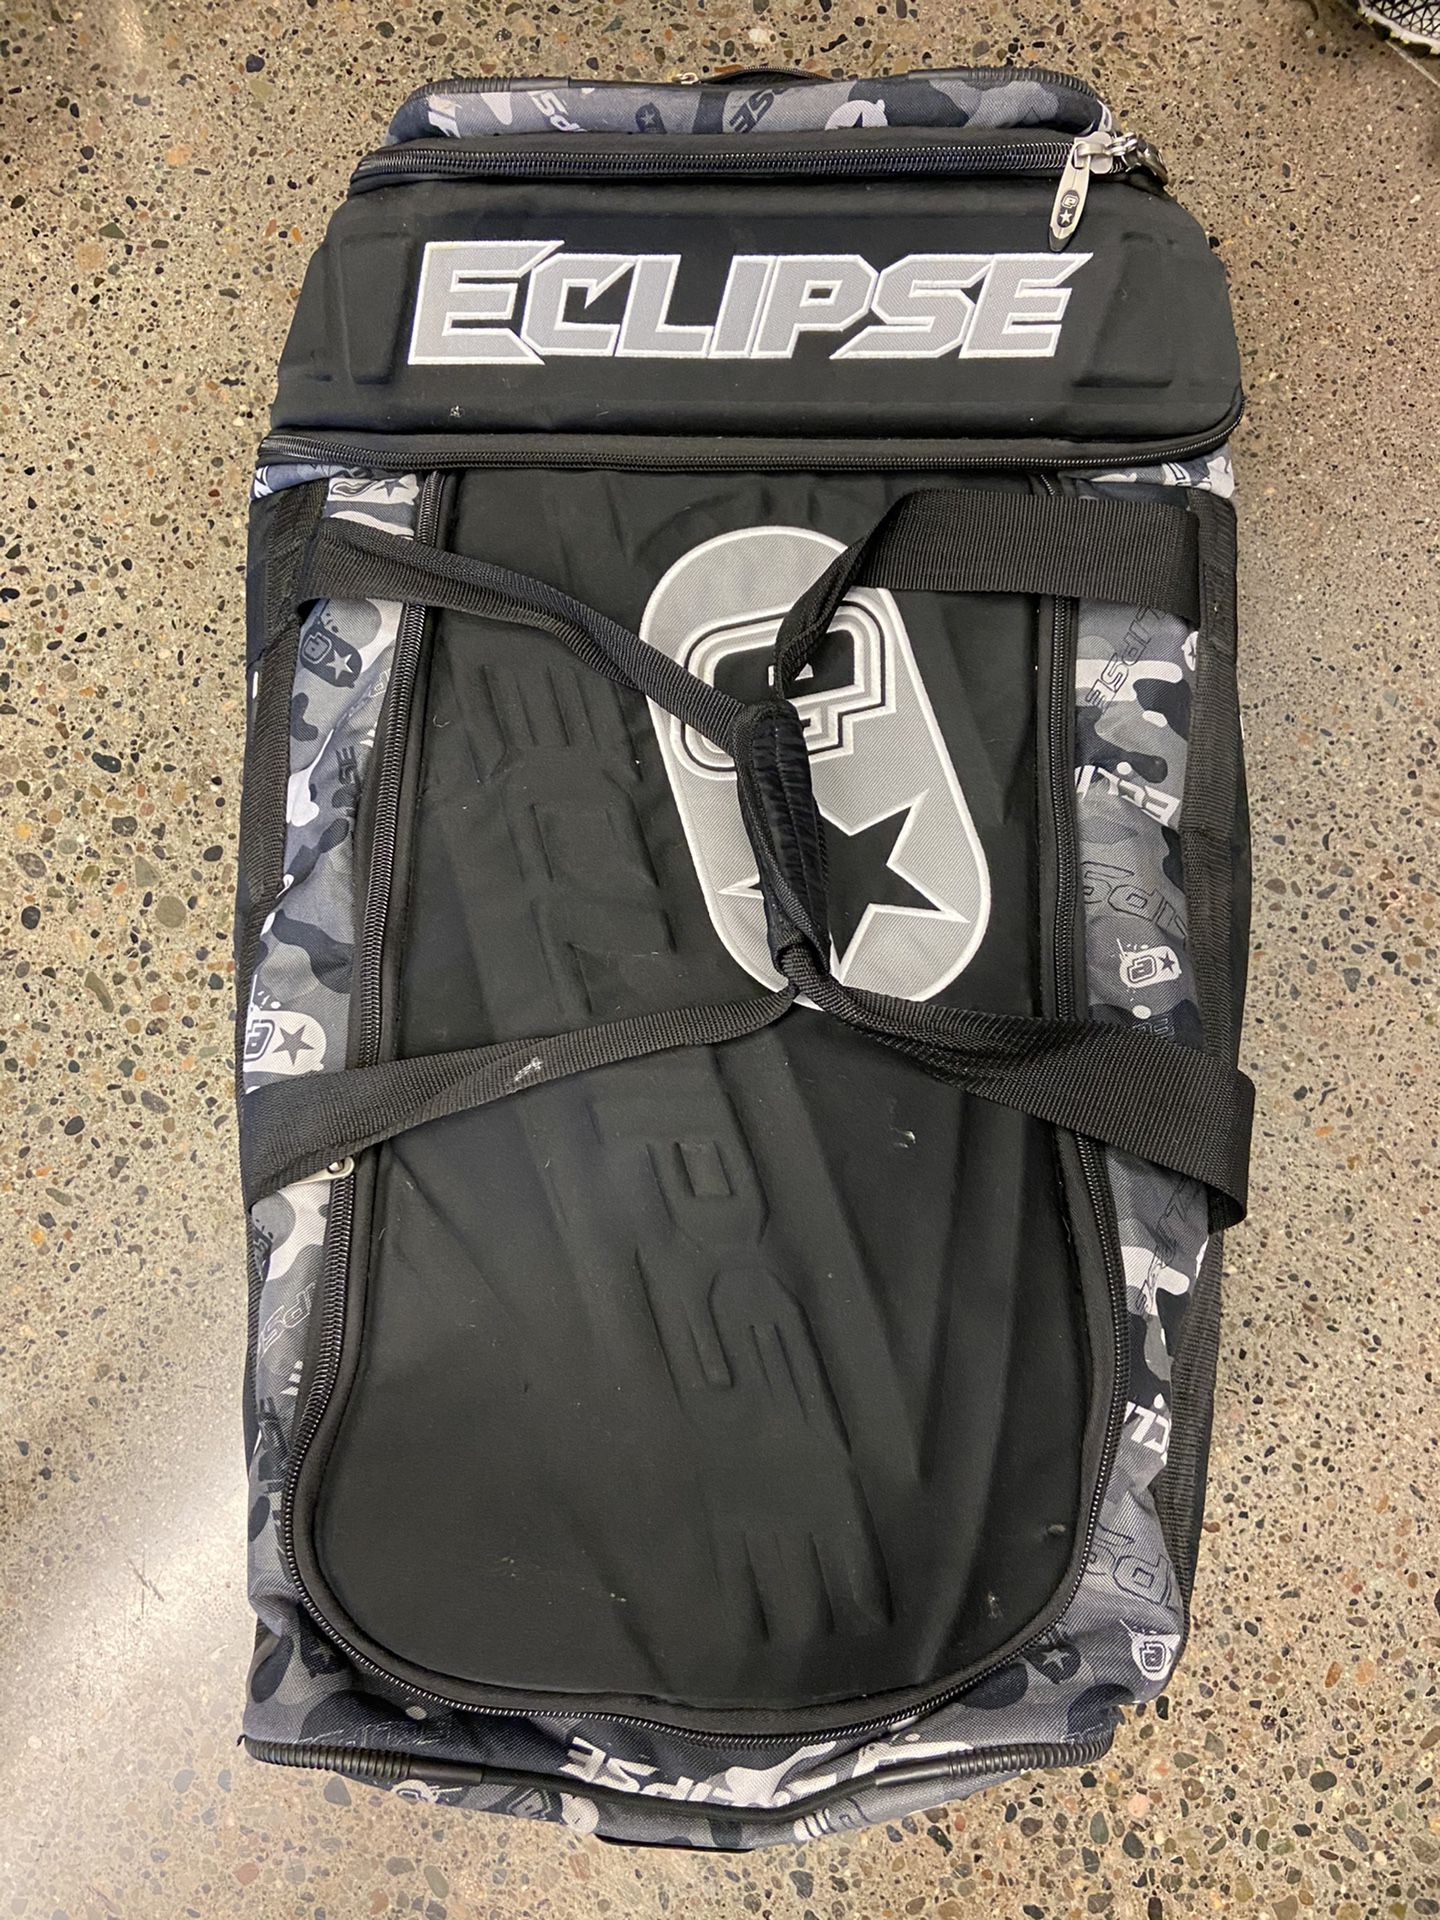 Planet Eclipse Rolling Duffle Gear Bag